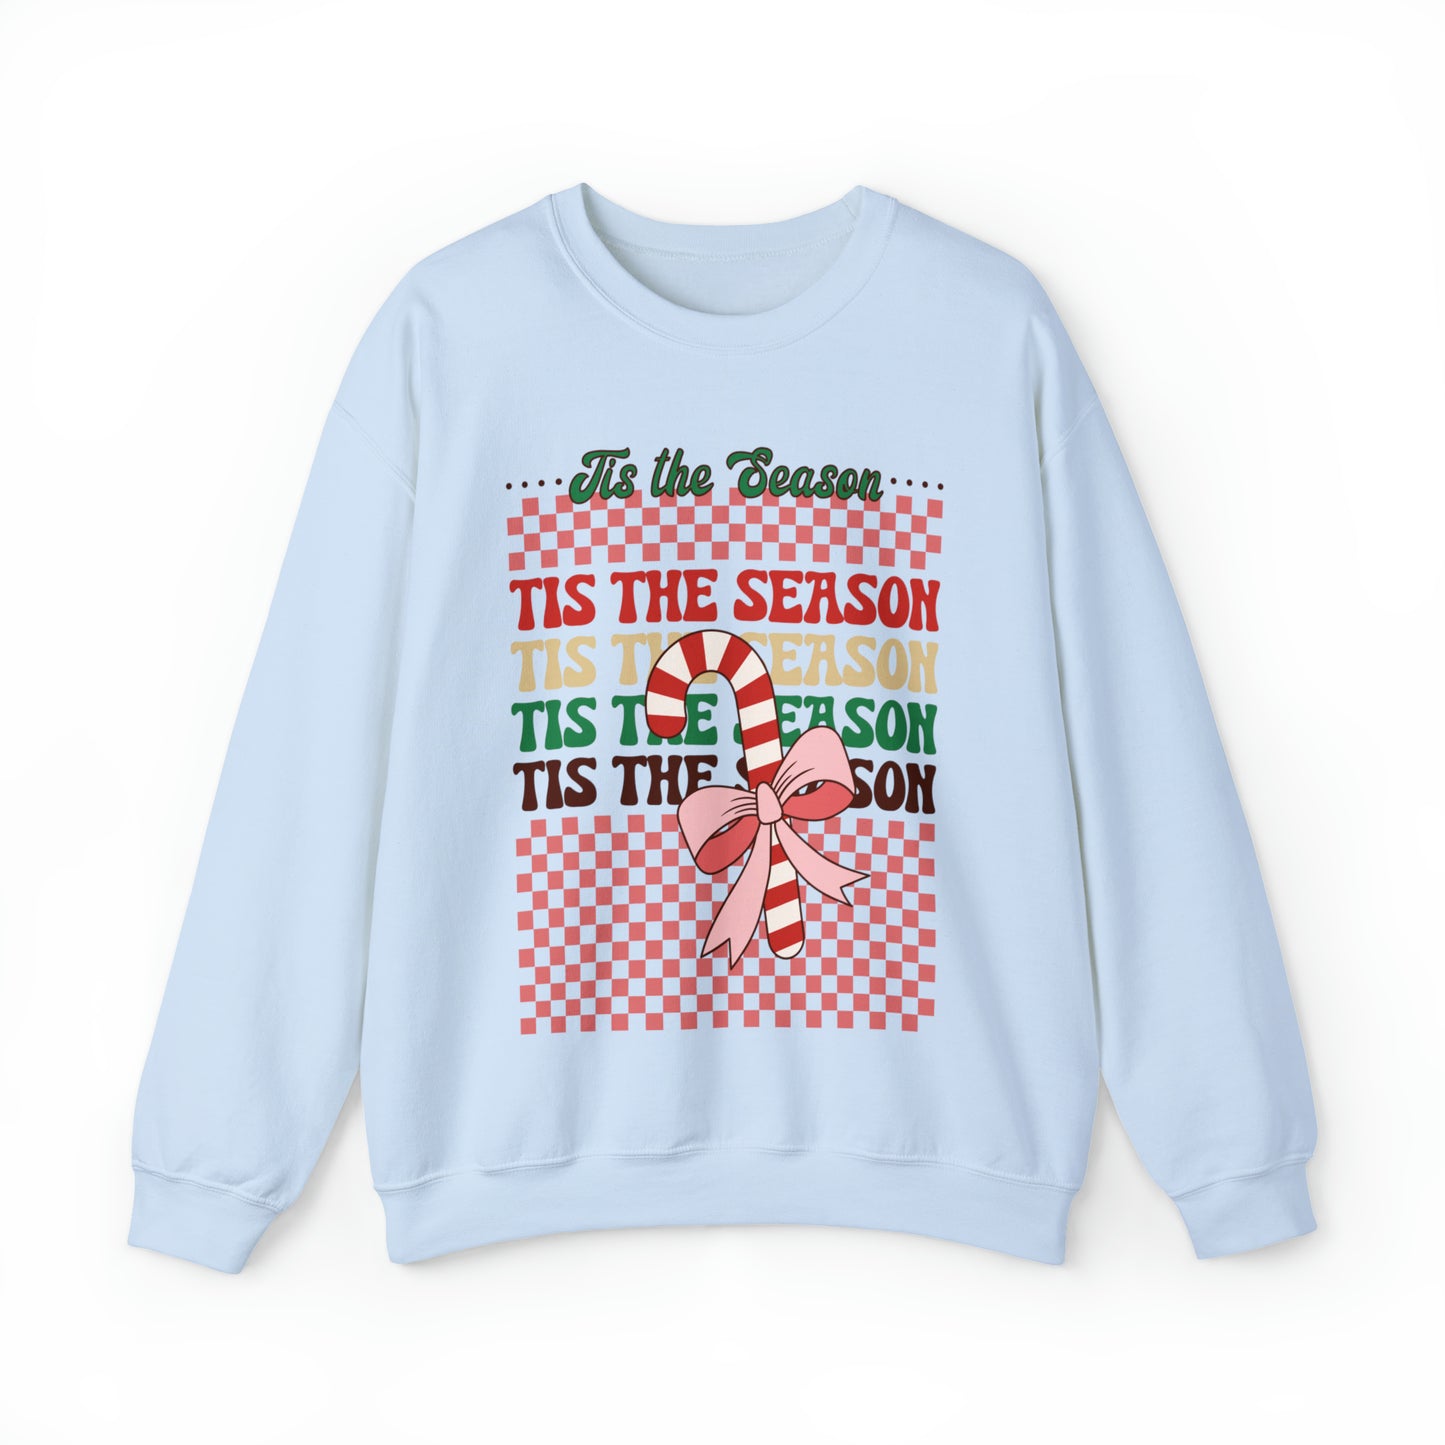 Tis the Season Women's Christmas Crewneck Sweatshirt